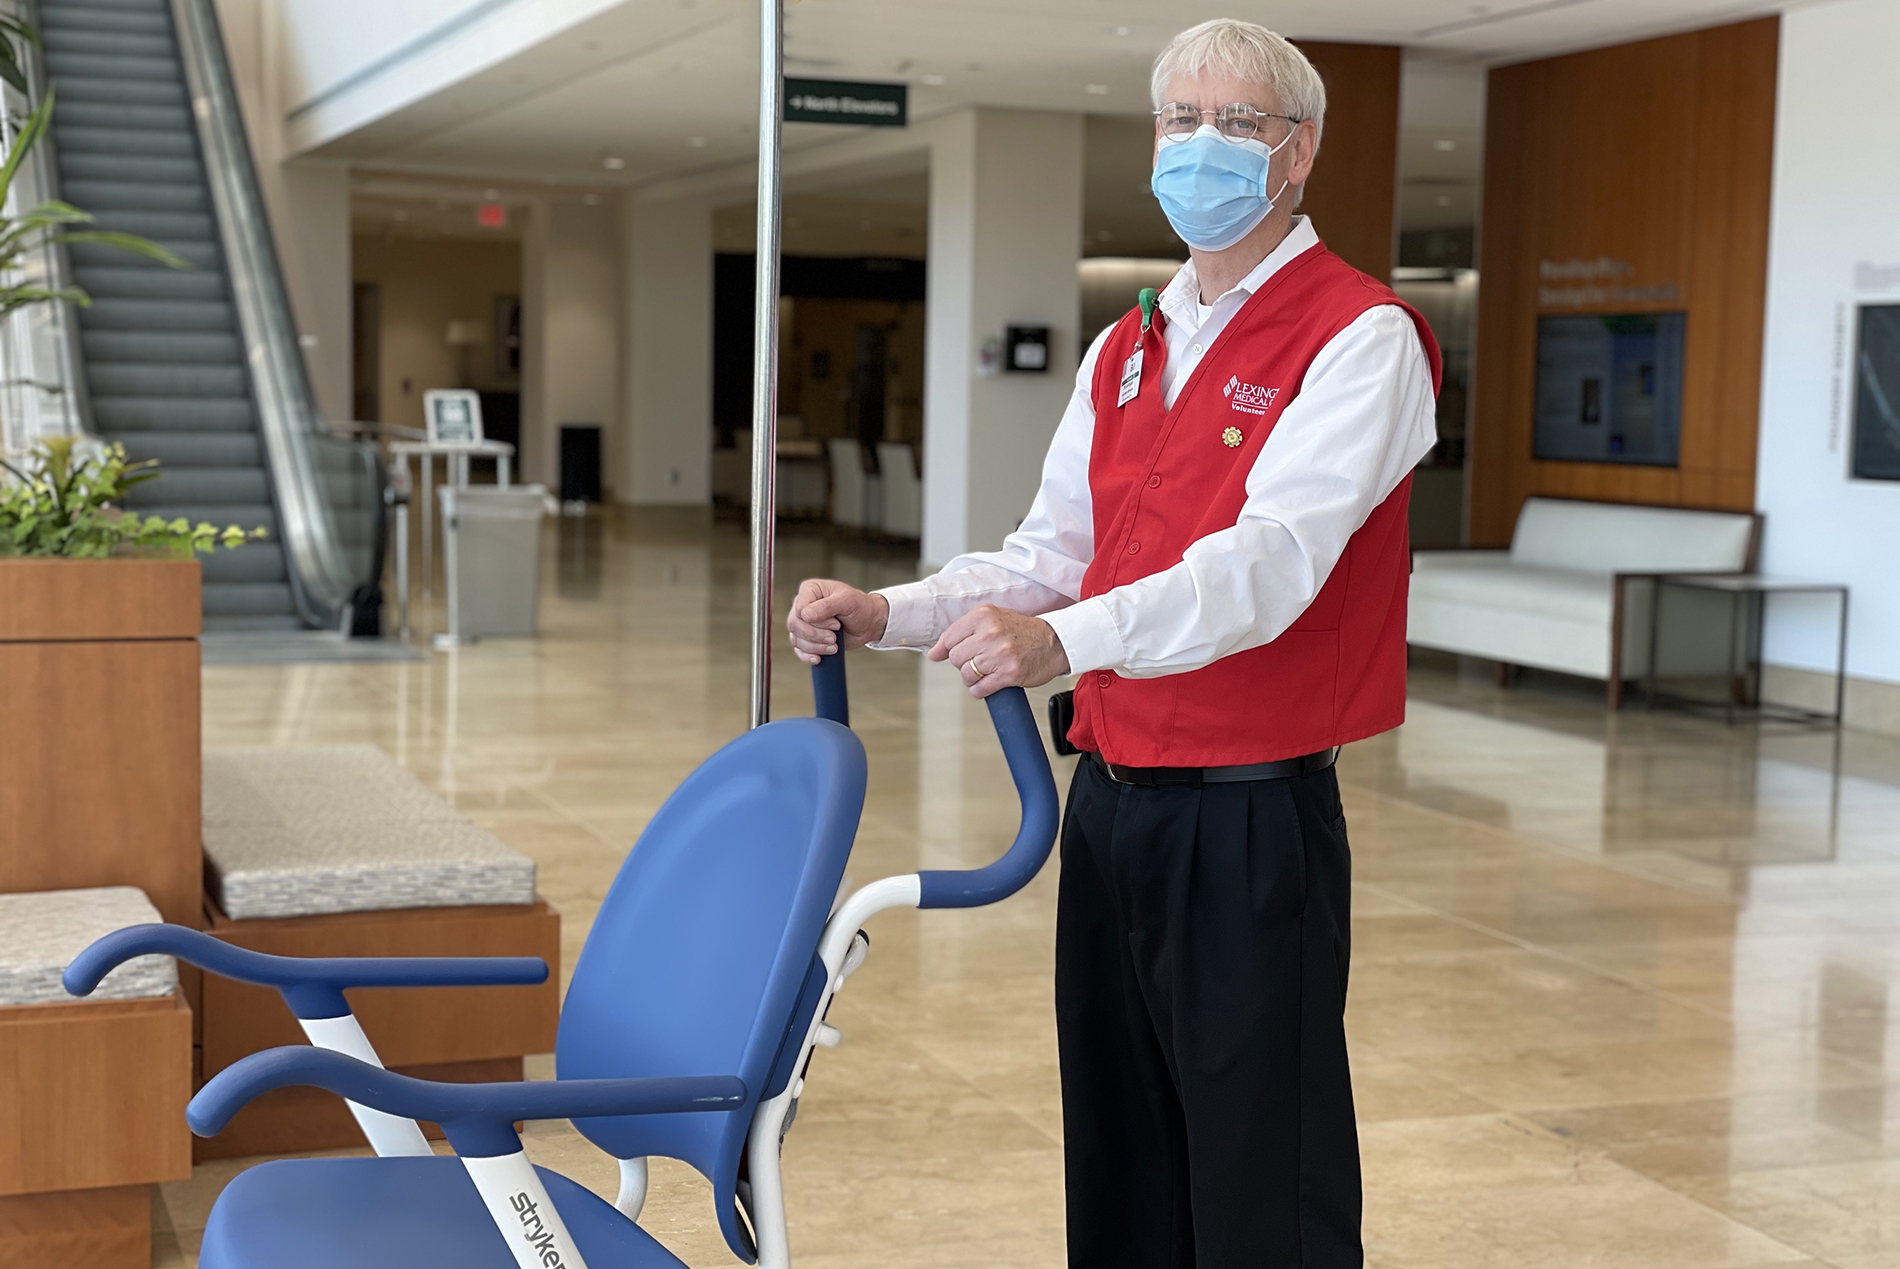 Male volunteer pushing wheelchair in hospital atrium